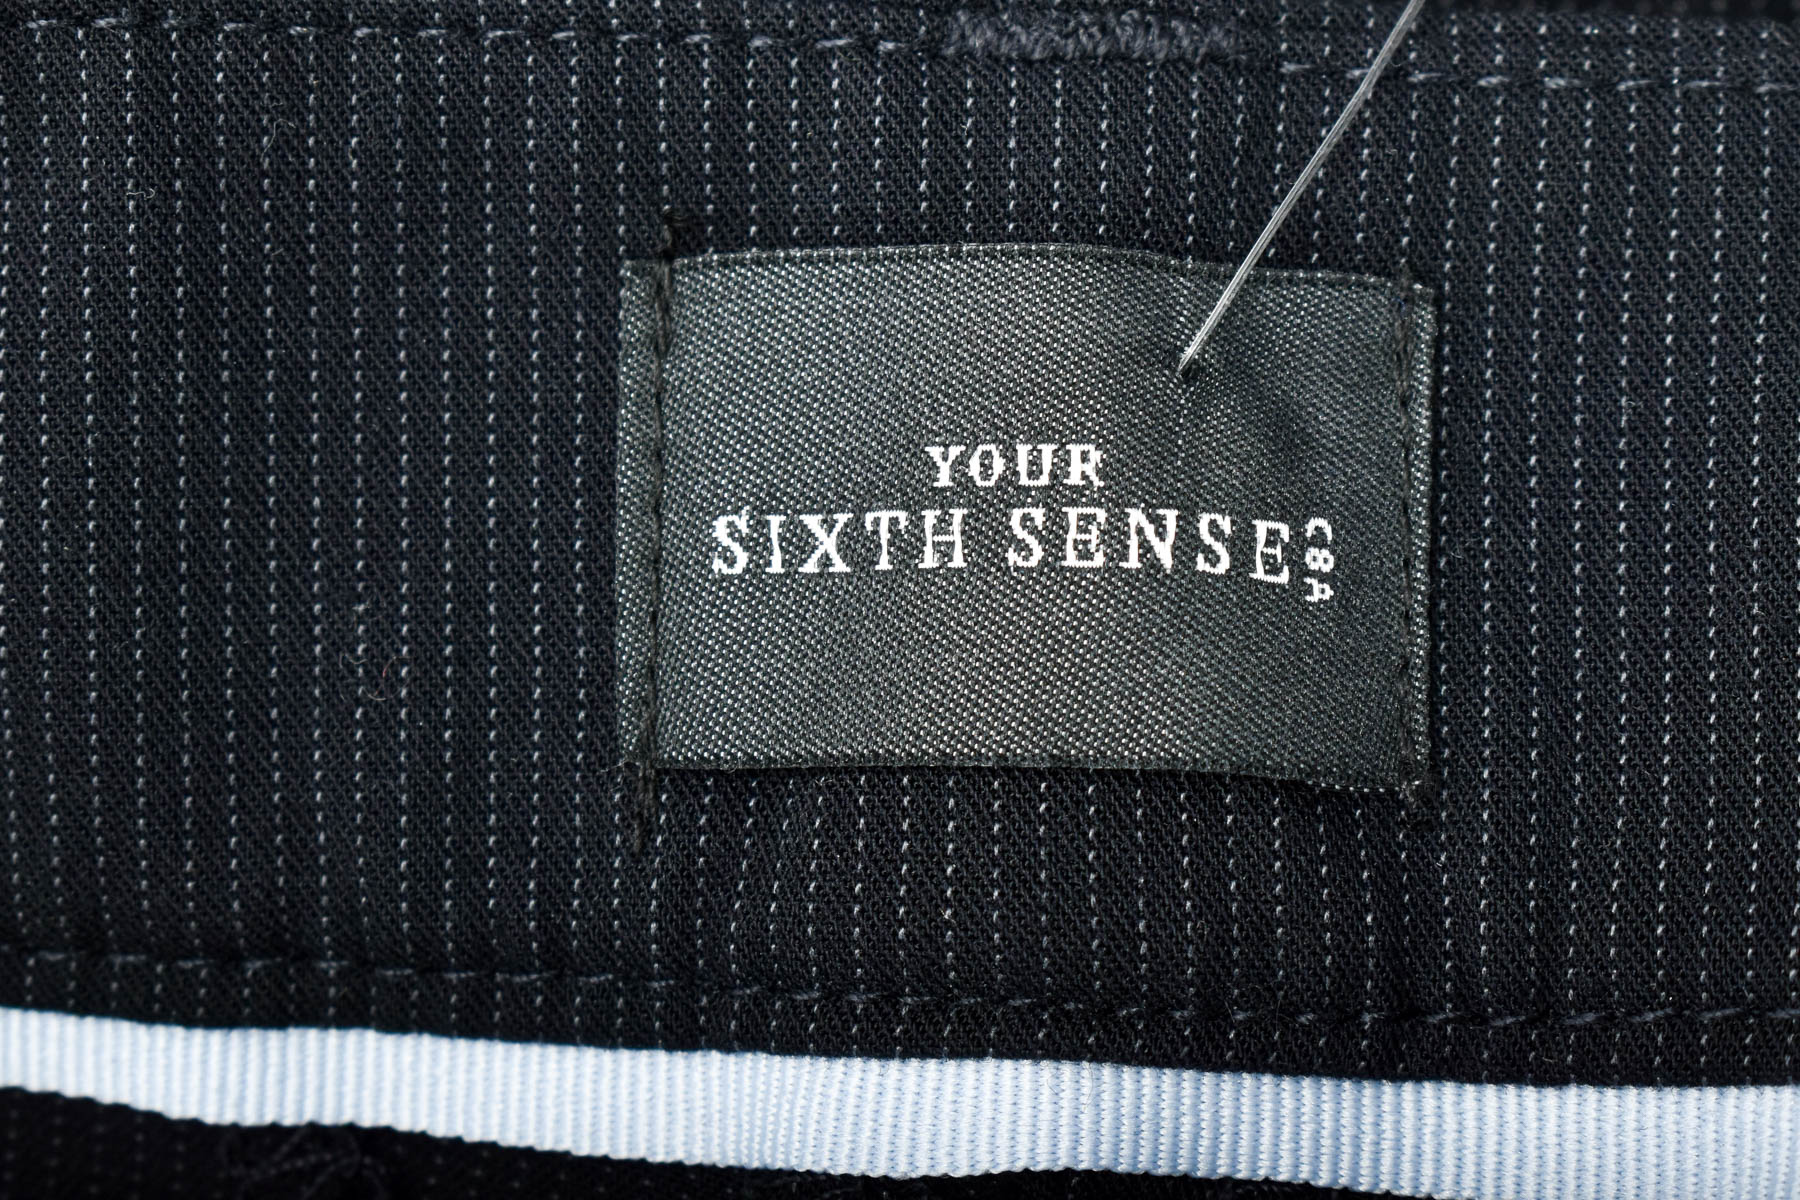 Women's trousers - Your Sixth Sense - 2